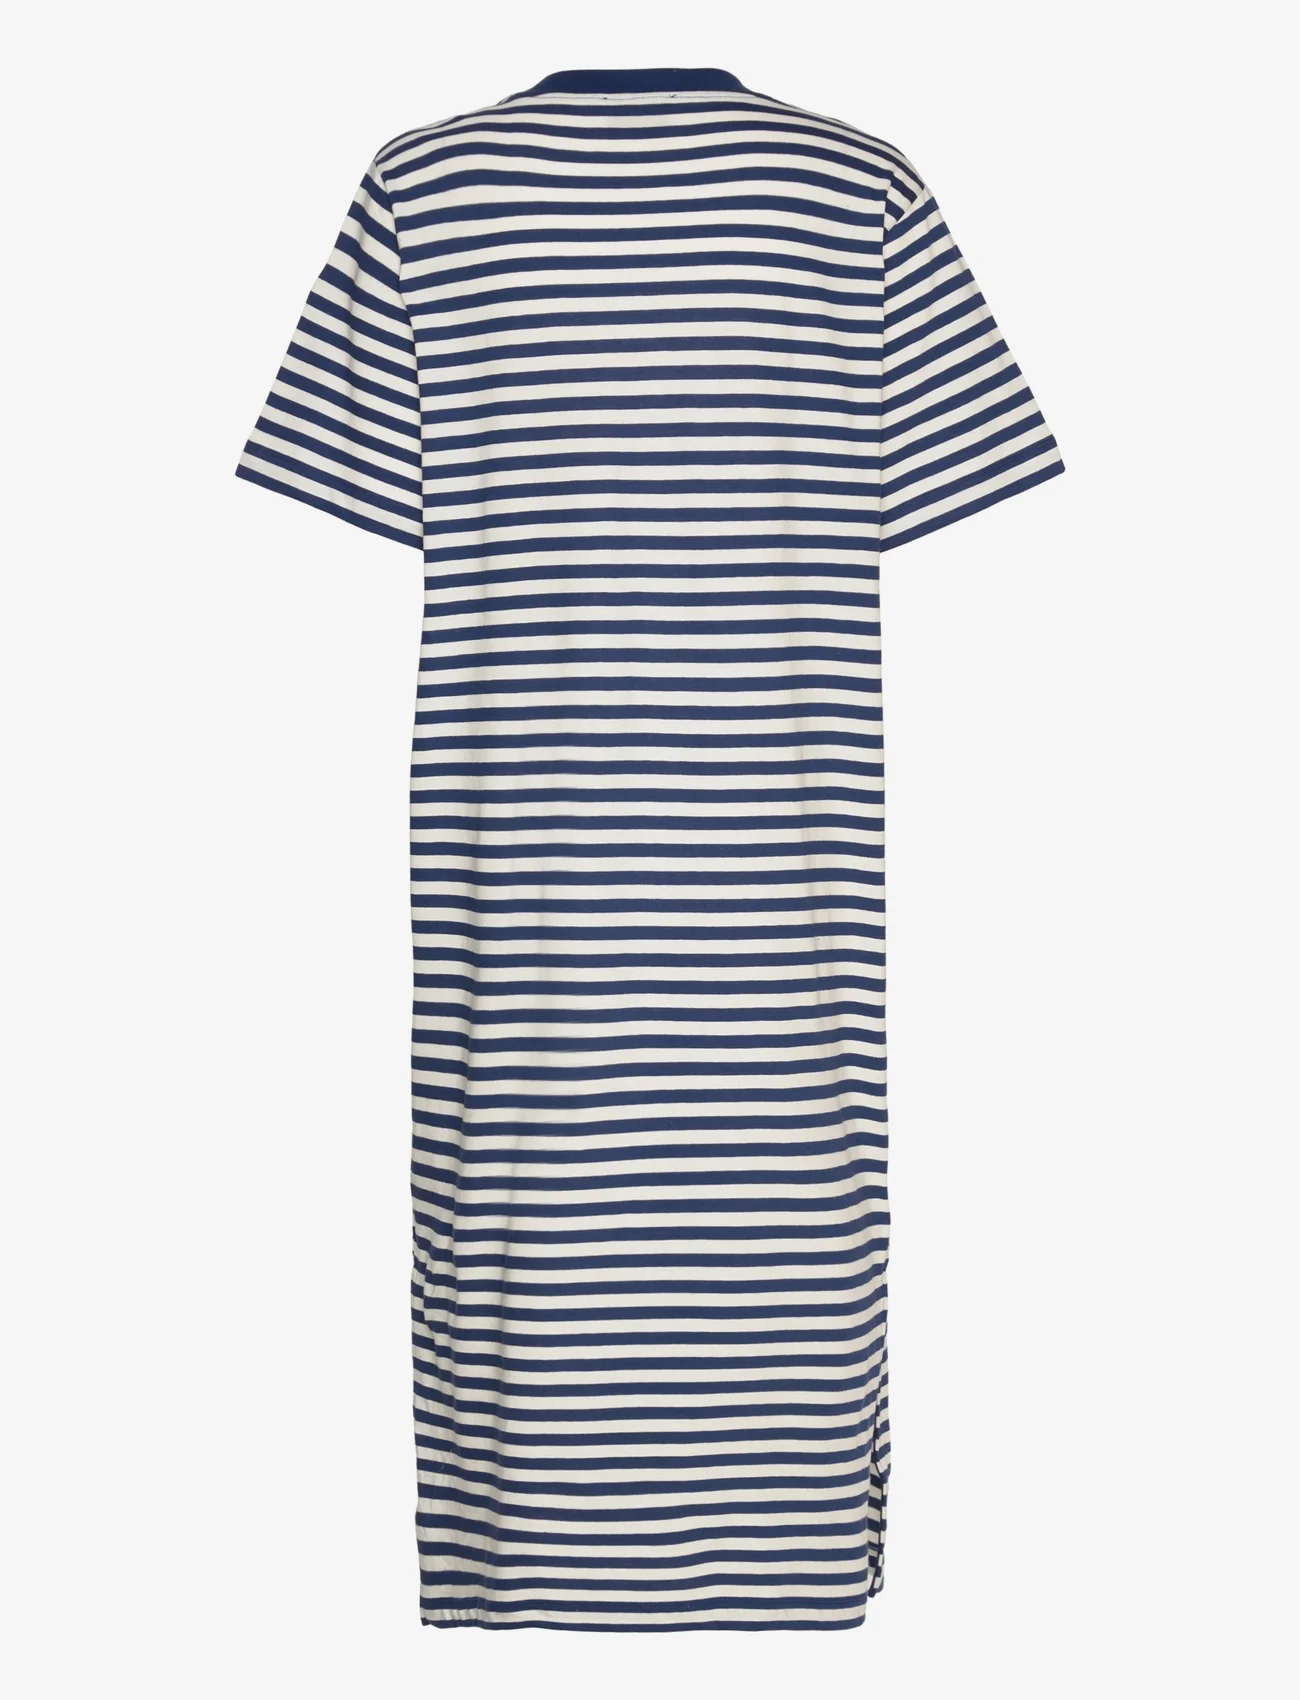 Mads Nørgaard - Single Organic Stripe Nou Dress - t-shirt dresses - estate blue/cloud dancer - 1